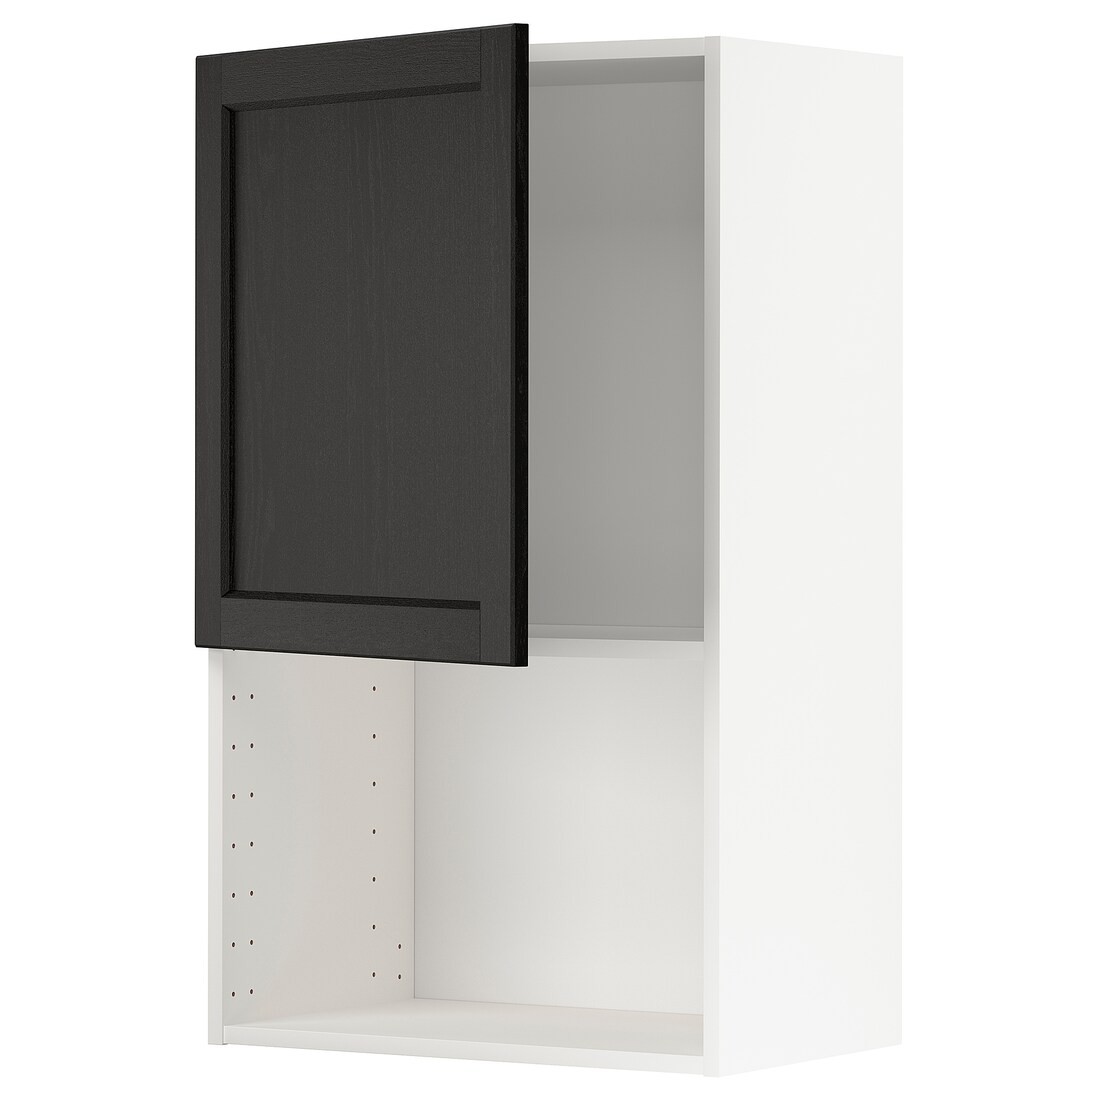 IKEA METOD МЕТОД Навесной шкаф для СВЧ-печи, белый / Lerhyttan черная морилка, 60x100 см 19466211 | 194.662.11